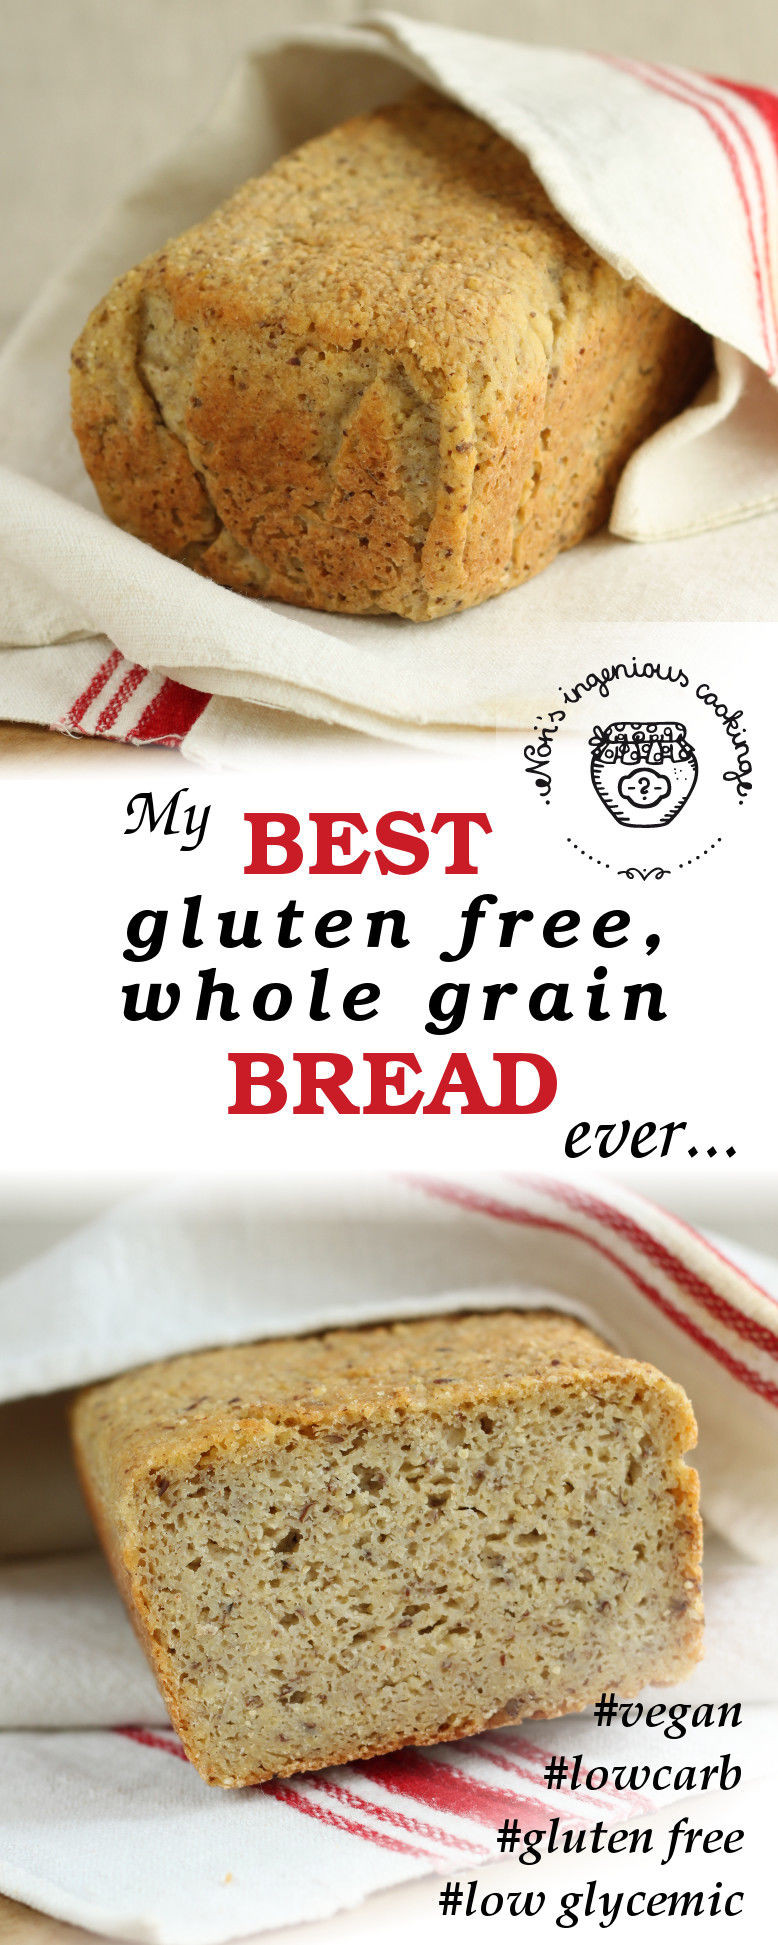 Vegan Whole Wheat Bread Recipes
 My best gluten free whole grain bread ever vegan